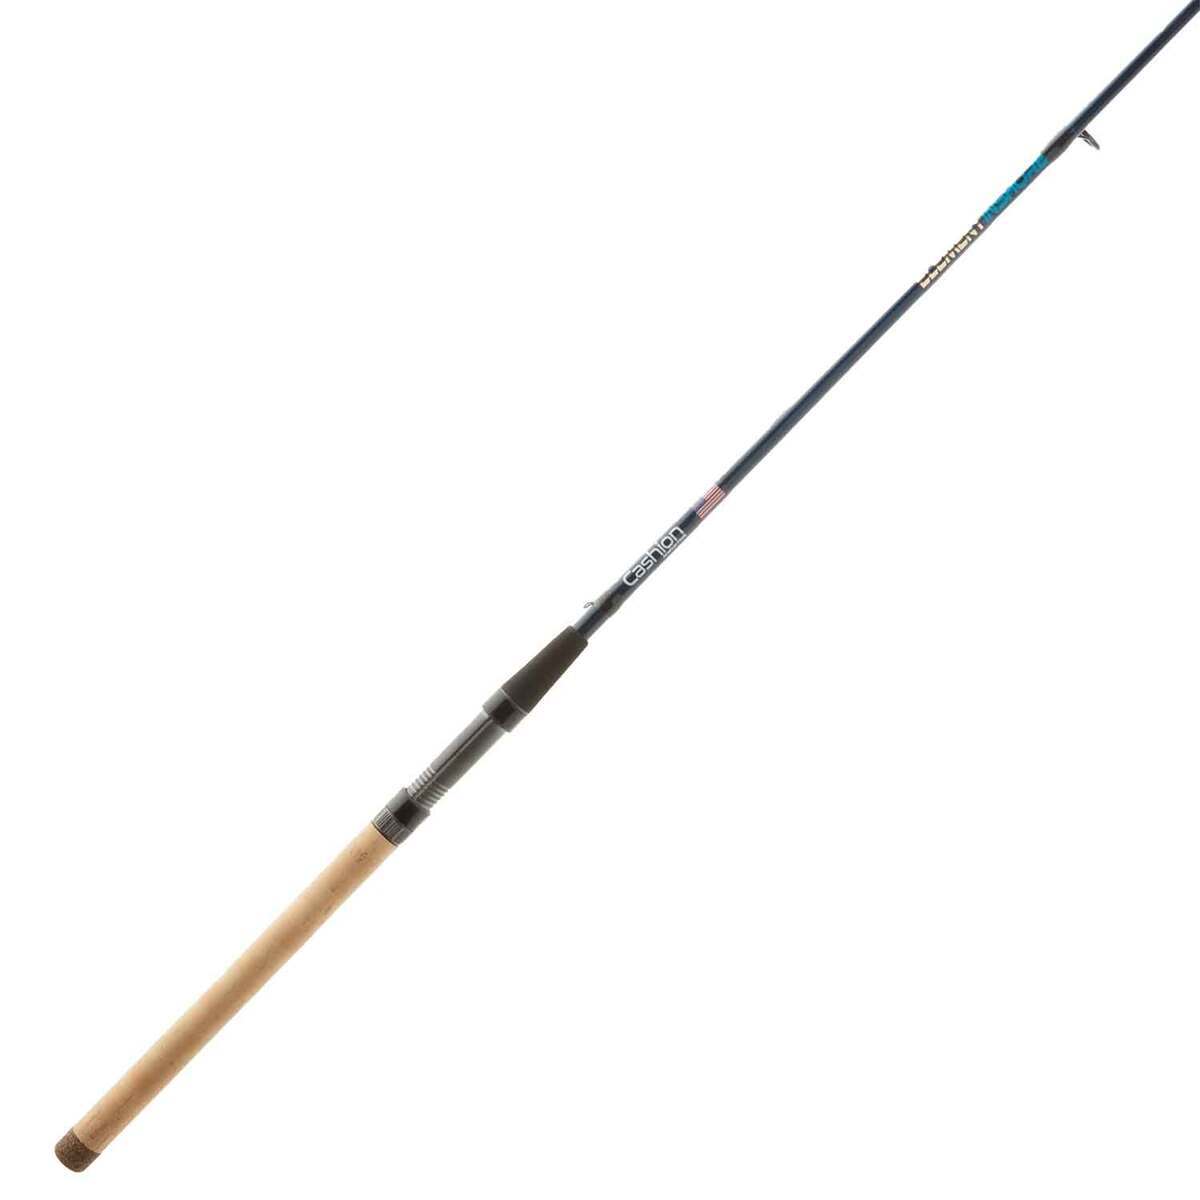 https://www.sportsmans.com/medias/cashion-fishing-rods-element-inshore-all-purpose-spinning-rod-7ft-6in-medium-power-fast-action-1pc-1801902-1.jpg?context=bWFzdGVyfGltYWdlc3wyMDA2MXxpbWFnZS9qcGVnfGFHRXdMMmhrT0M4eE1URXpNalkxT0RFeU1qYzRNaTh4T0RBeE9UQXlMVEZmWW1GelpTMWpiMjUyWlhKemFXOXVSbTl5YldGMFh6RXlNREF0WTI5dWRtVnljMmx2YmtadmNtMWhkQXwzODJhMzJiNjljY2Y3ZGRiNmI2MzMyYWFhMzMzZTVhM2E1ZDMyY2ViNTM2YmZhZjQyNTdiMWJmYThkNWI5OTRm